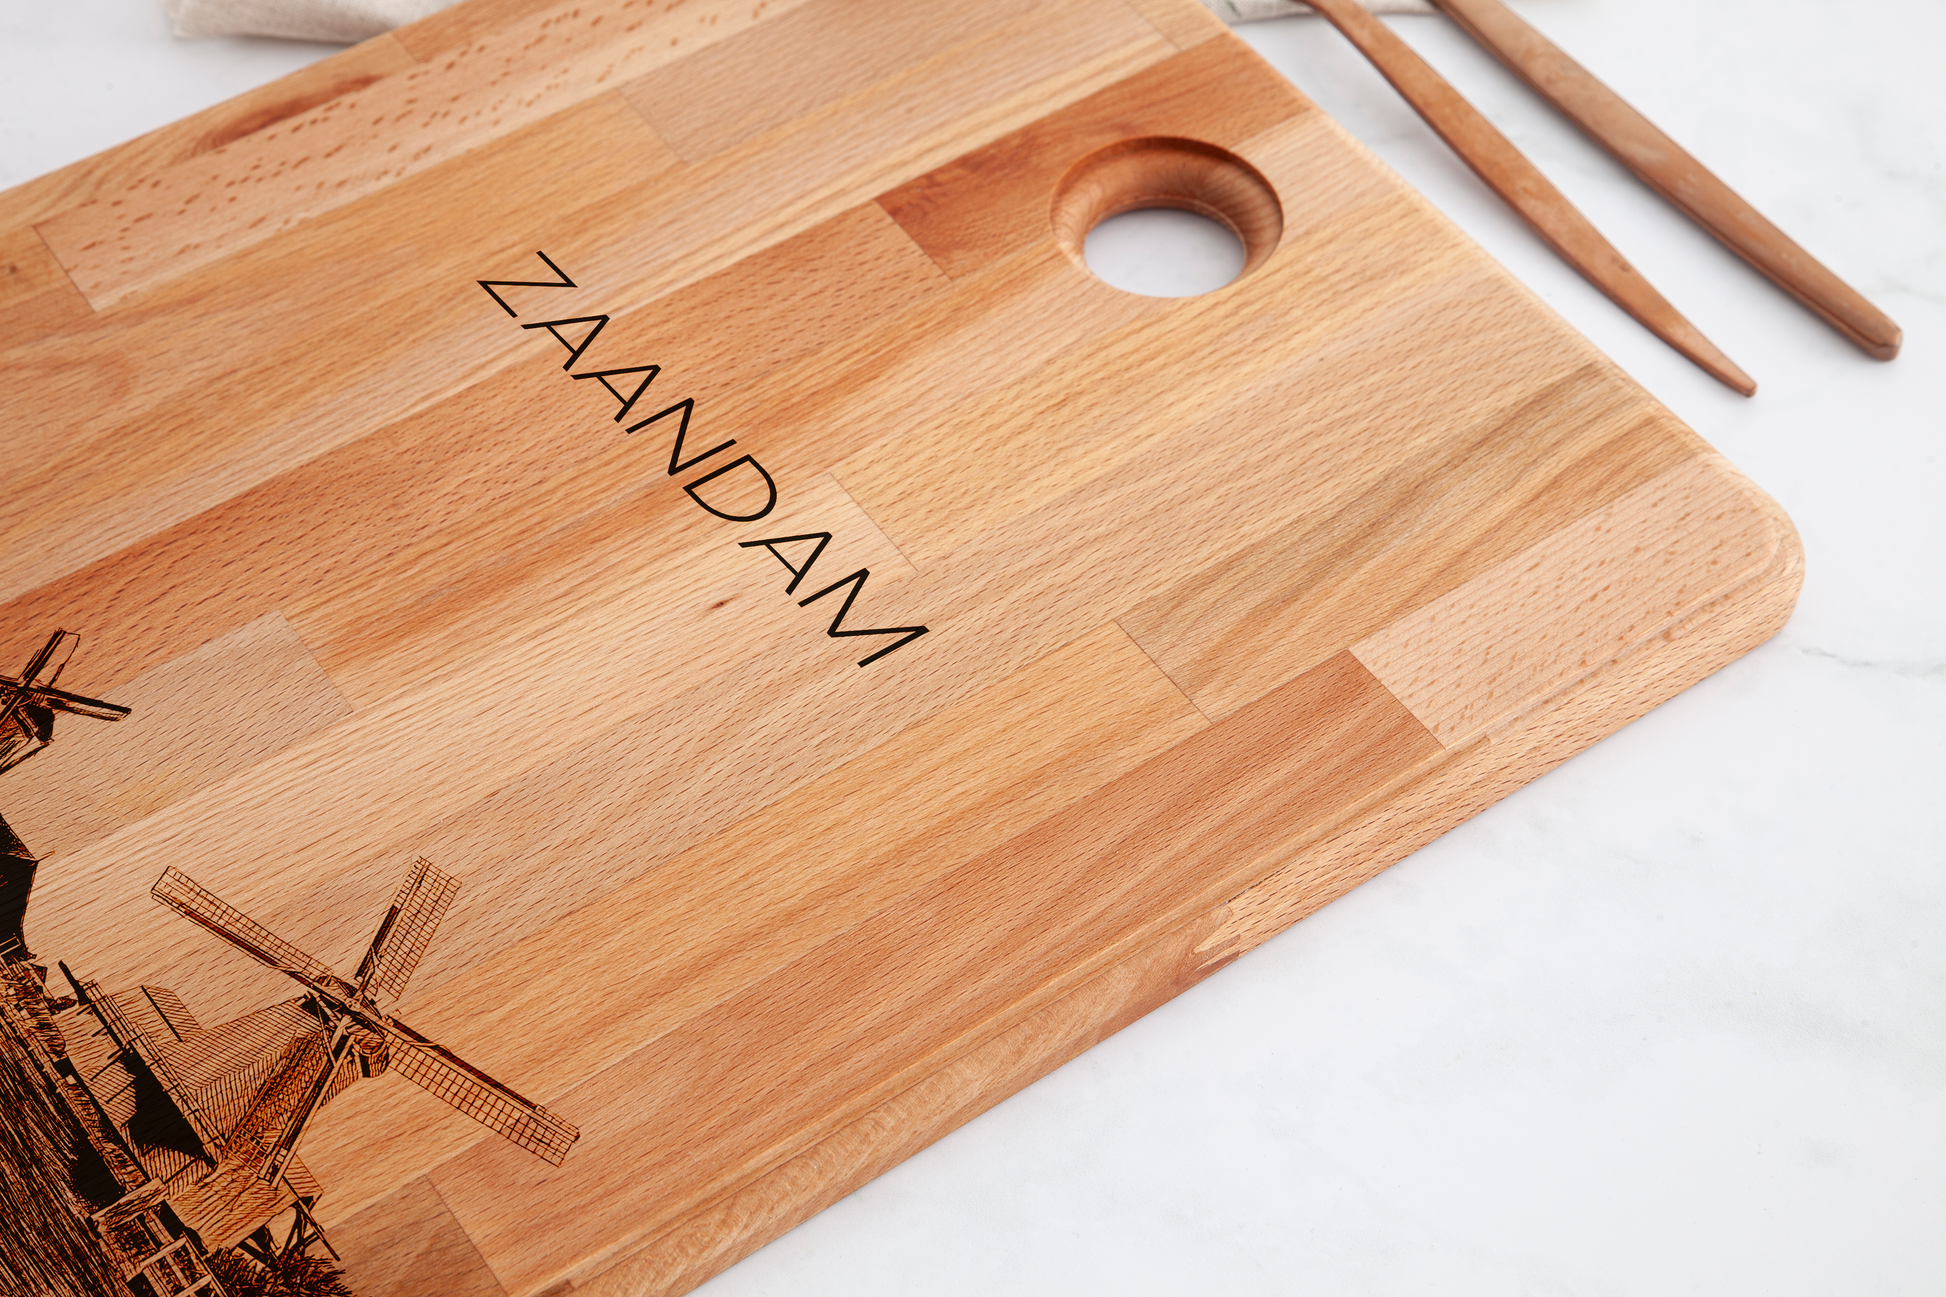 Zaandam, Zaanse Schans, cutting board, wood grain